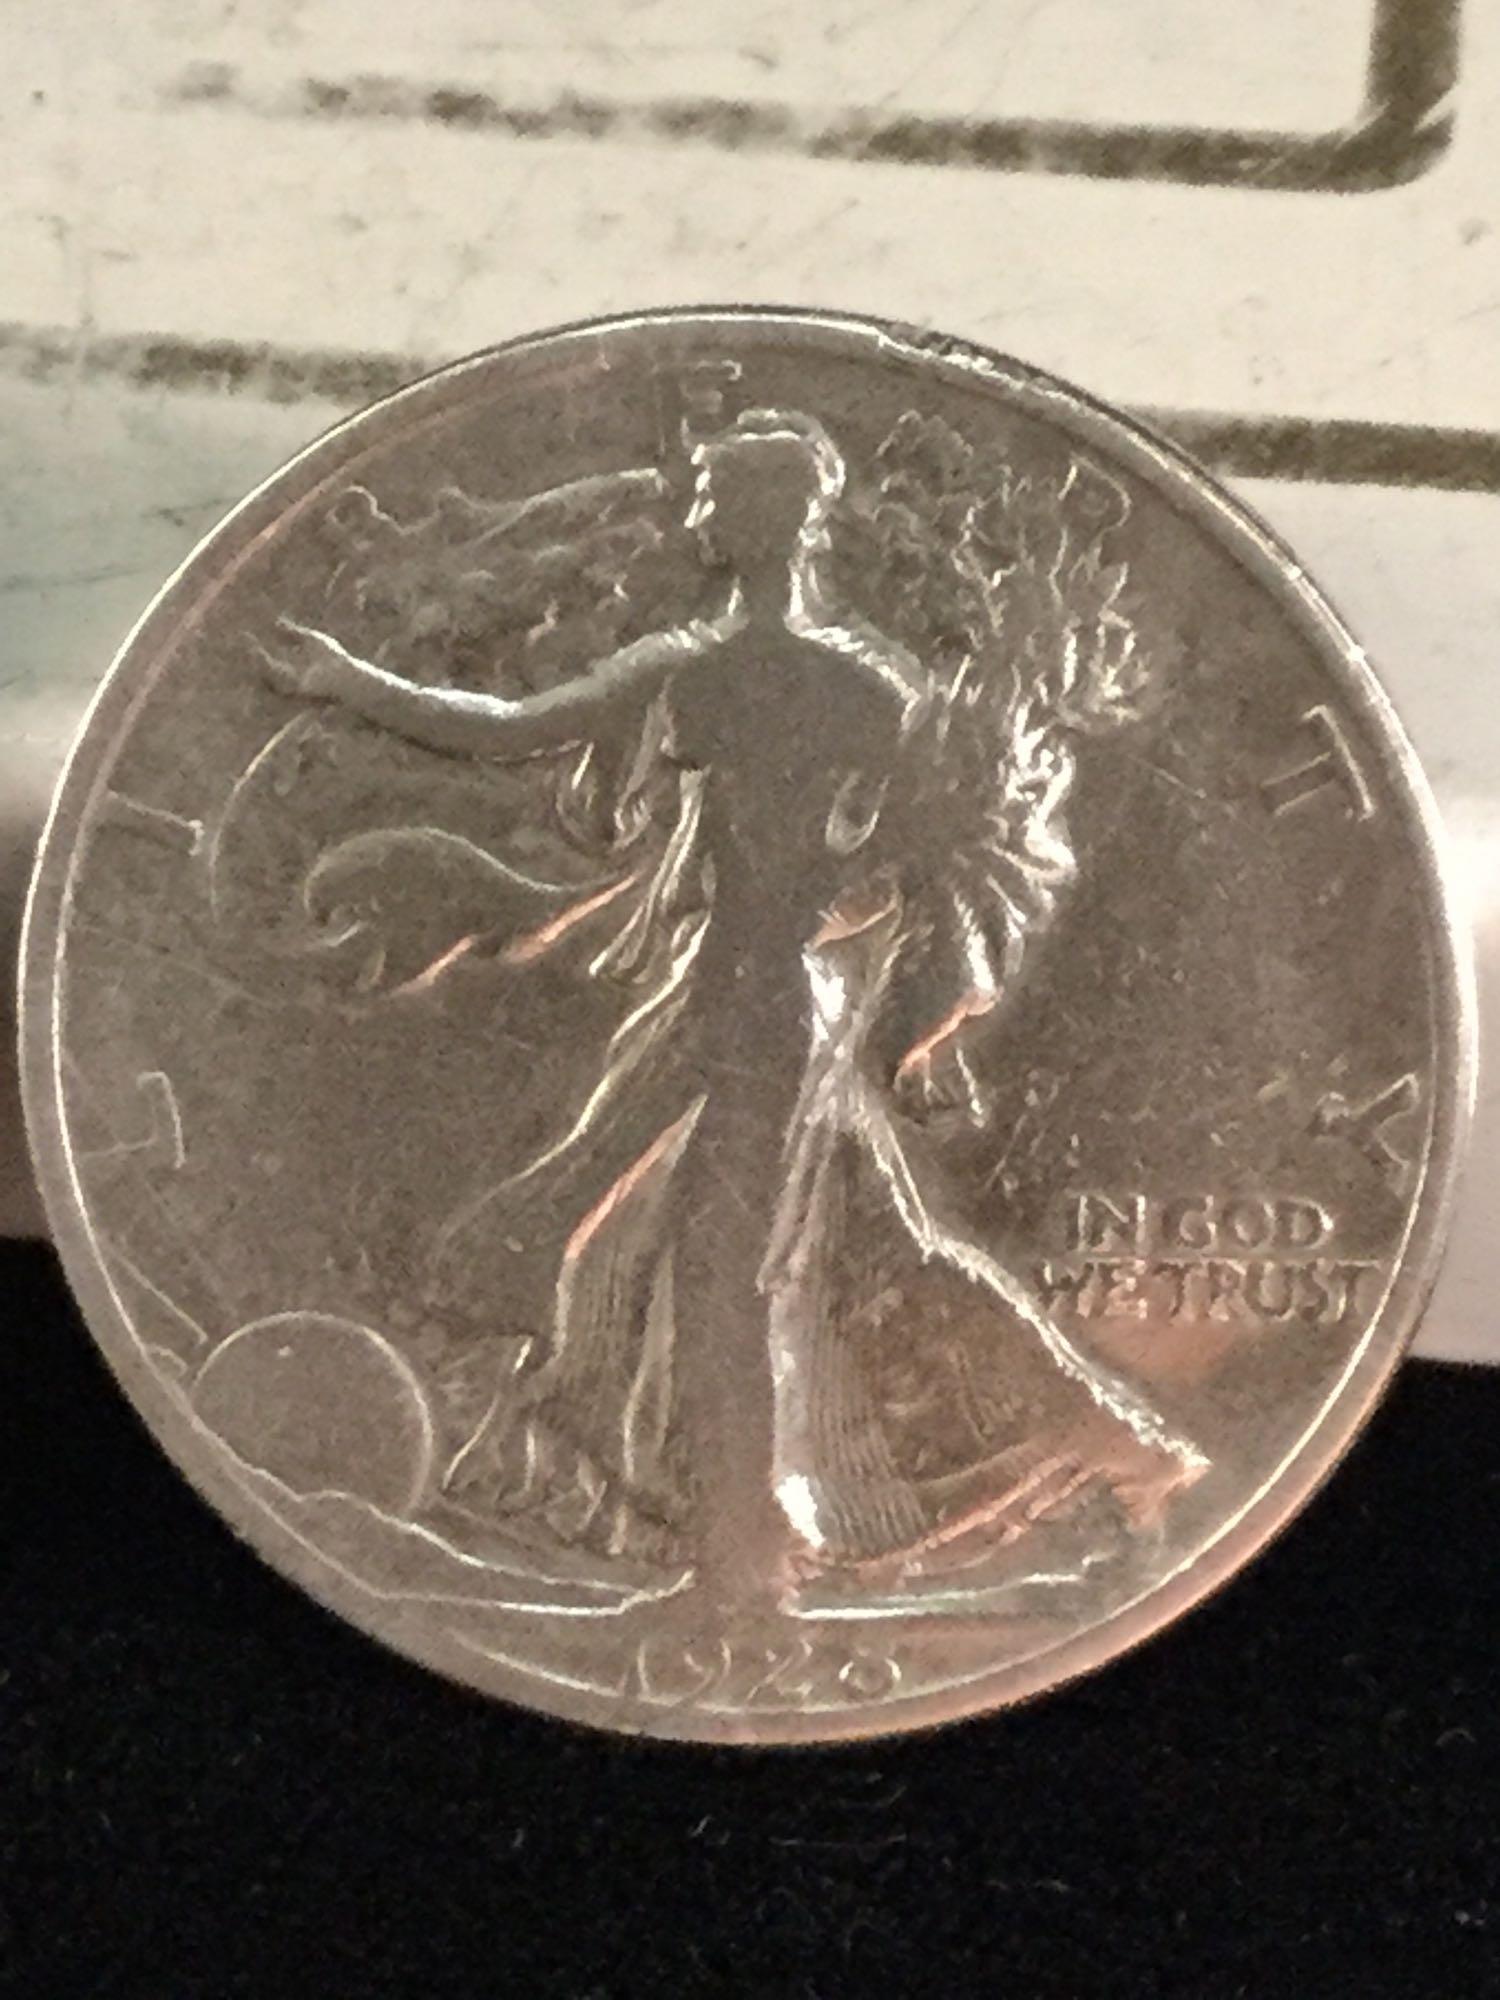 3 silver walking Liberty half dollars, 1917-S, 1918-S, and 1928-S